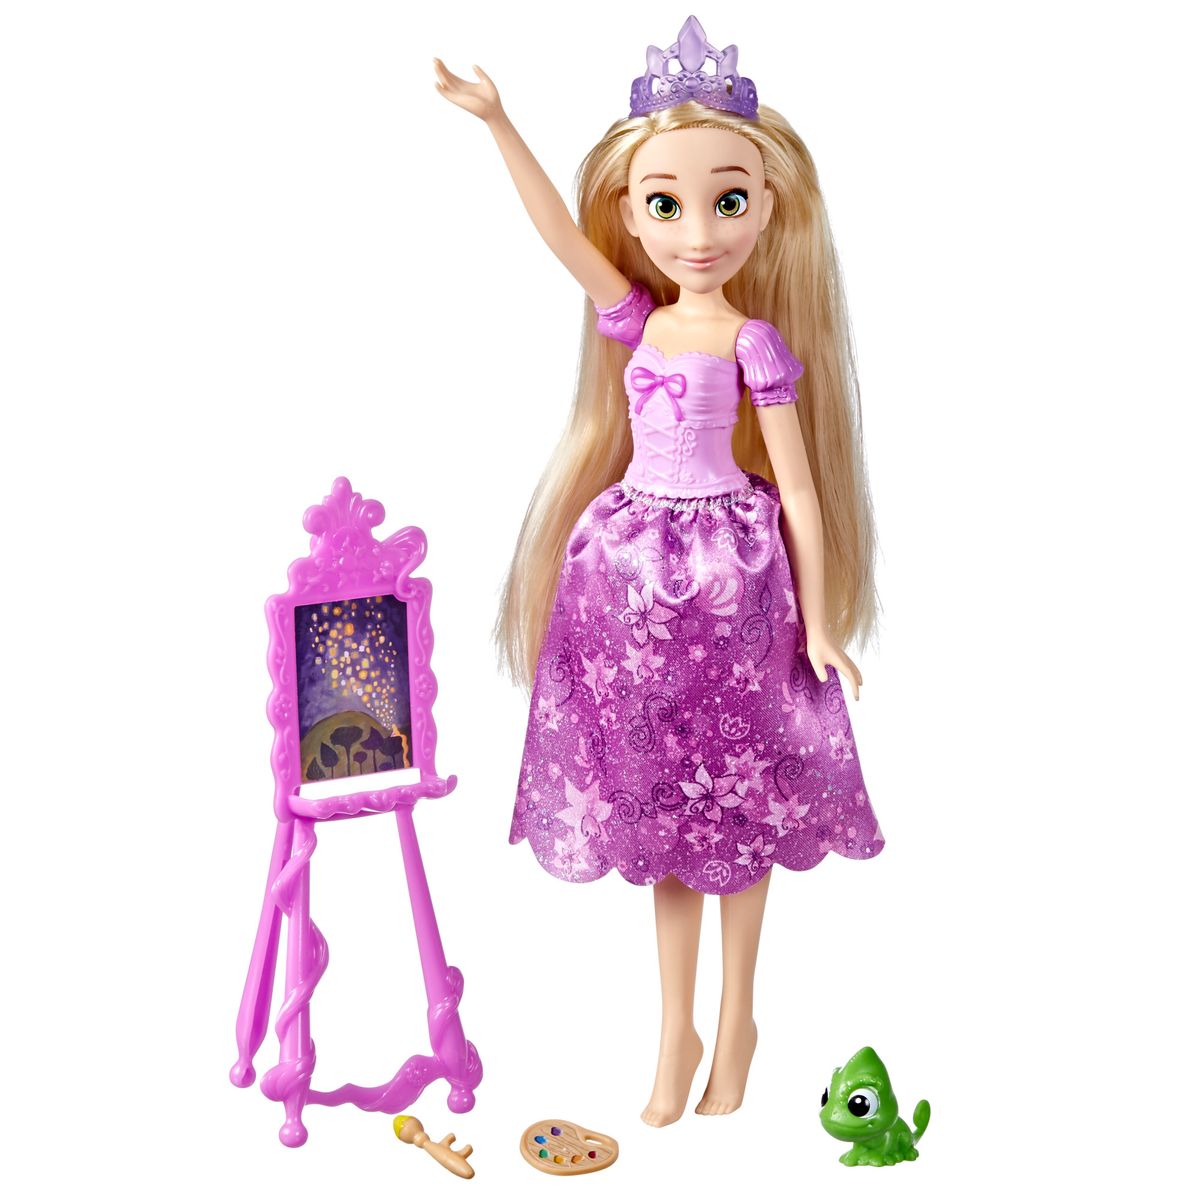 [RDY] [送料無料] Disney Princess ラプンツェルのフローティング・ライツ・ペインティング・プレイセット ドール パスカル・フィギュア付き 3歳以上の子供向け玩具 [楽天海外通販] | Disney Princess